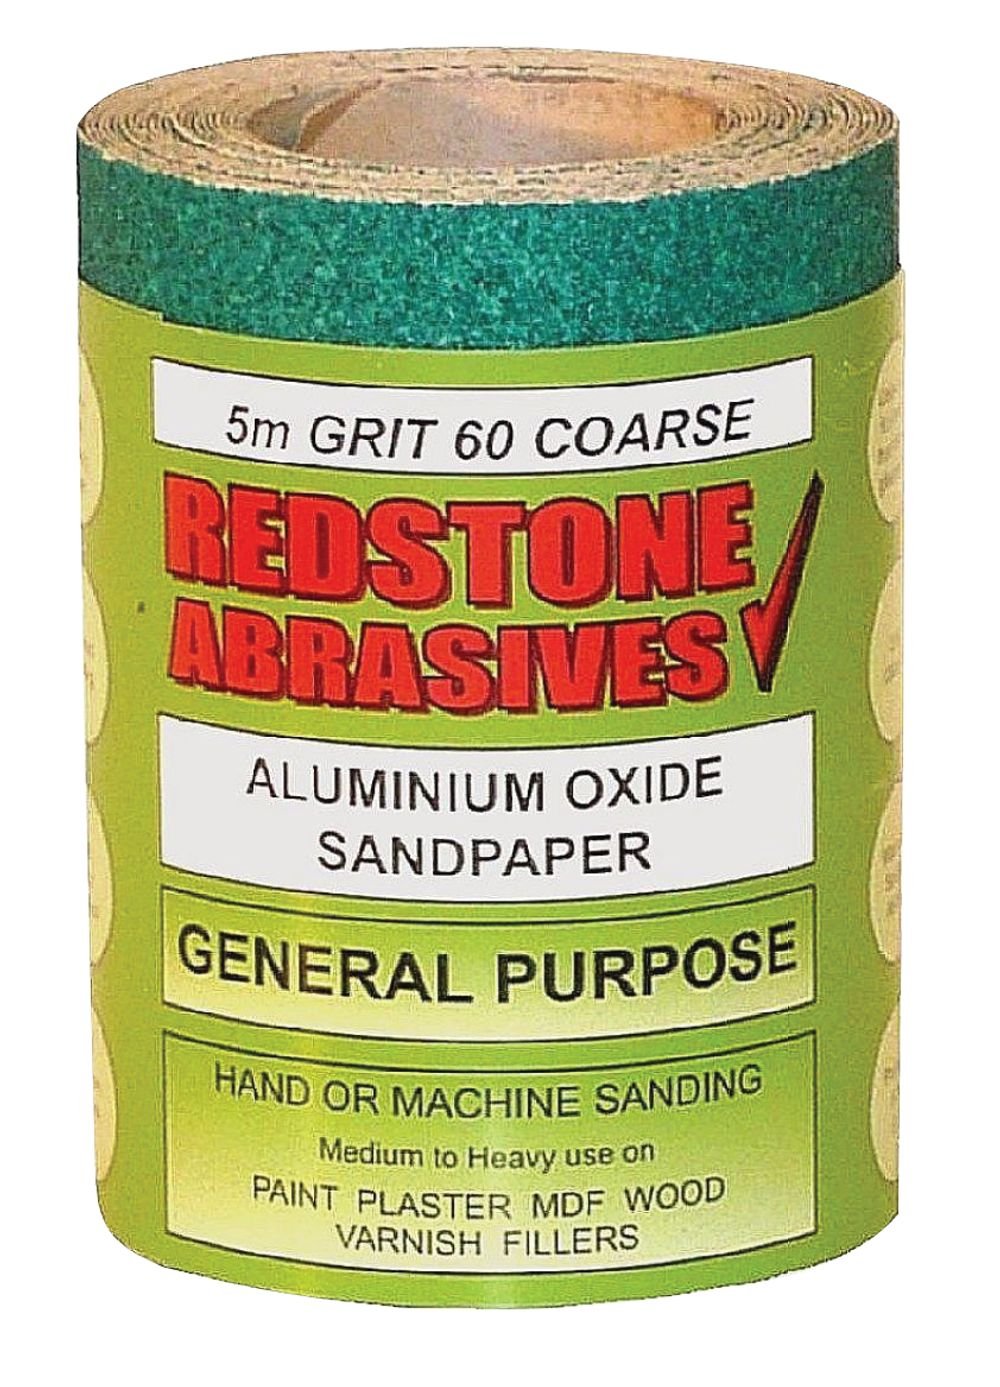 Redstone Abrasives Green 60 Grit (5M)